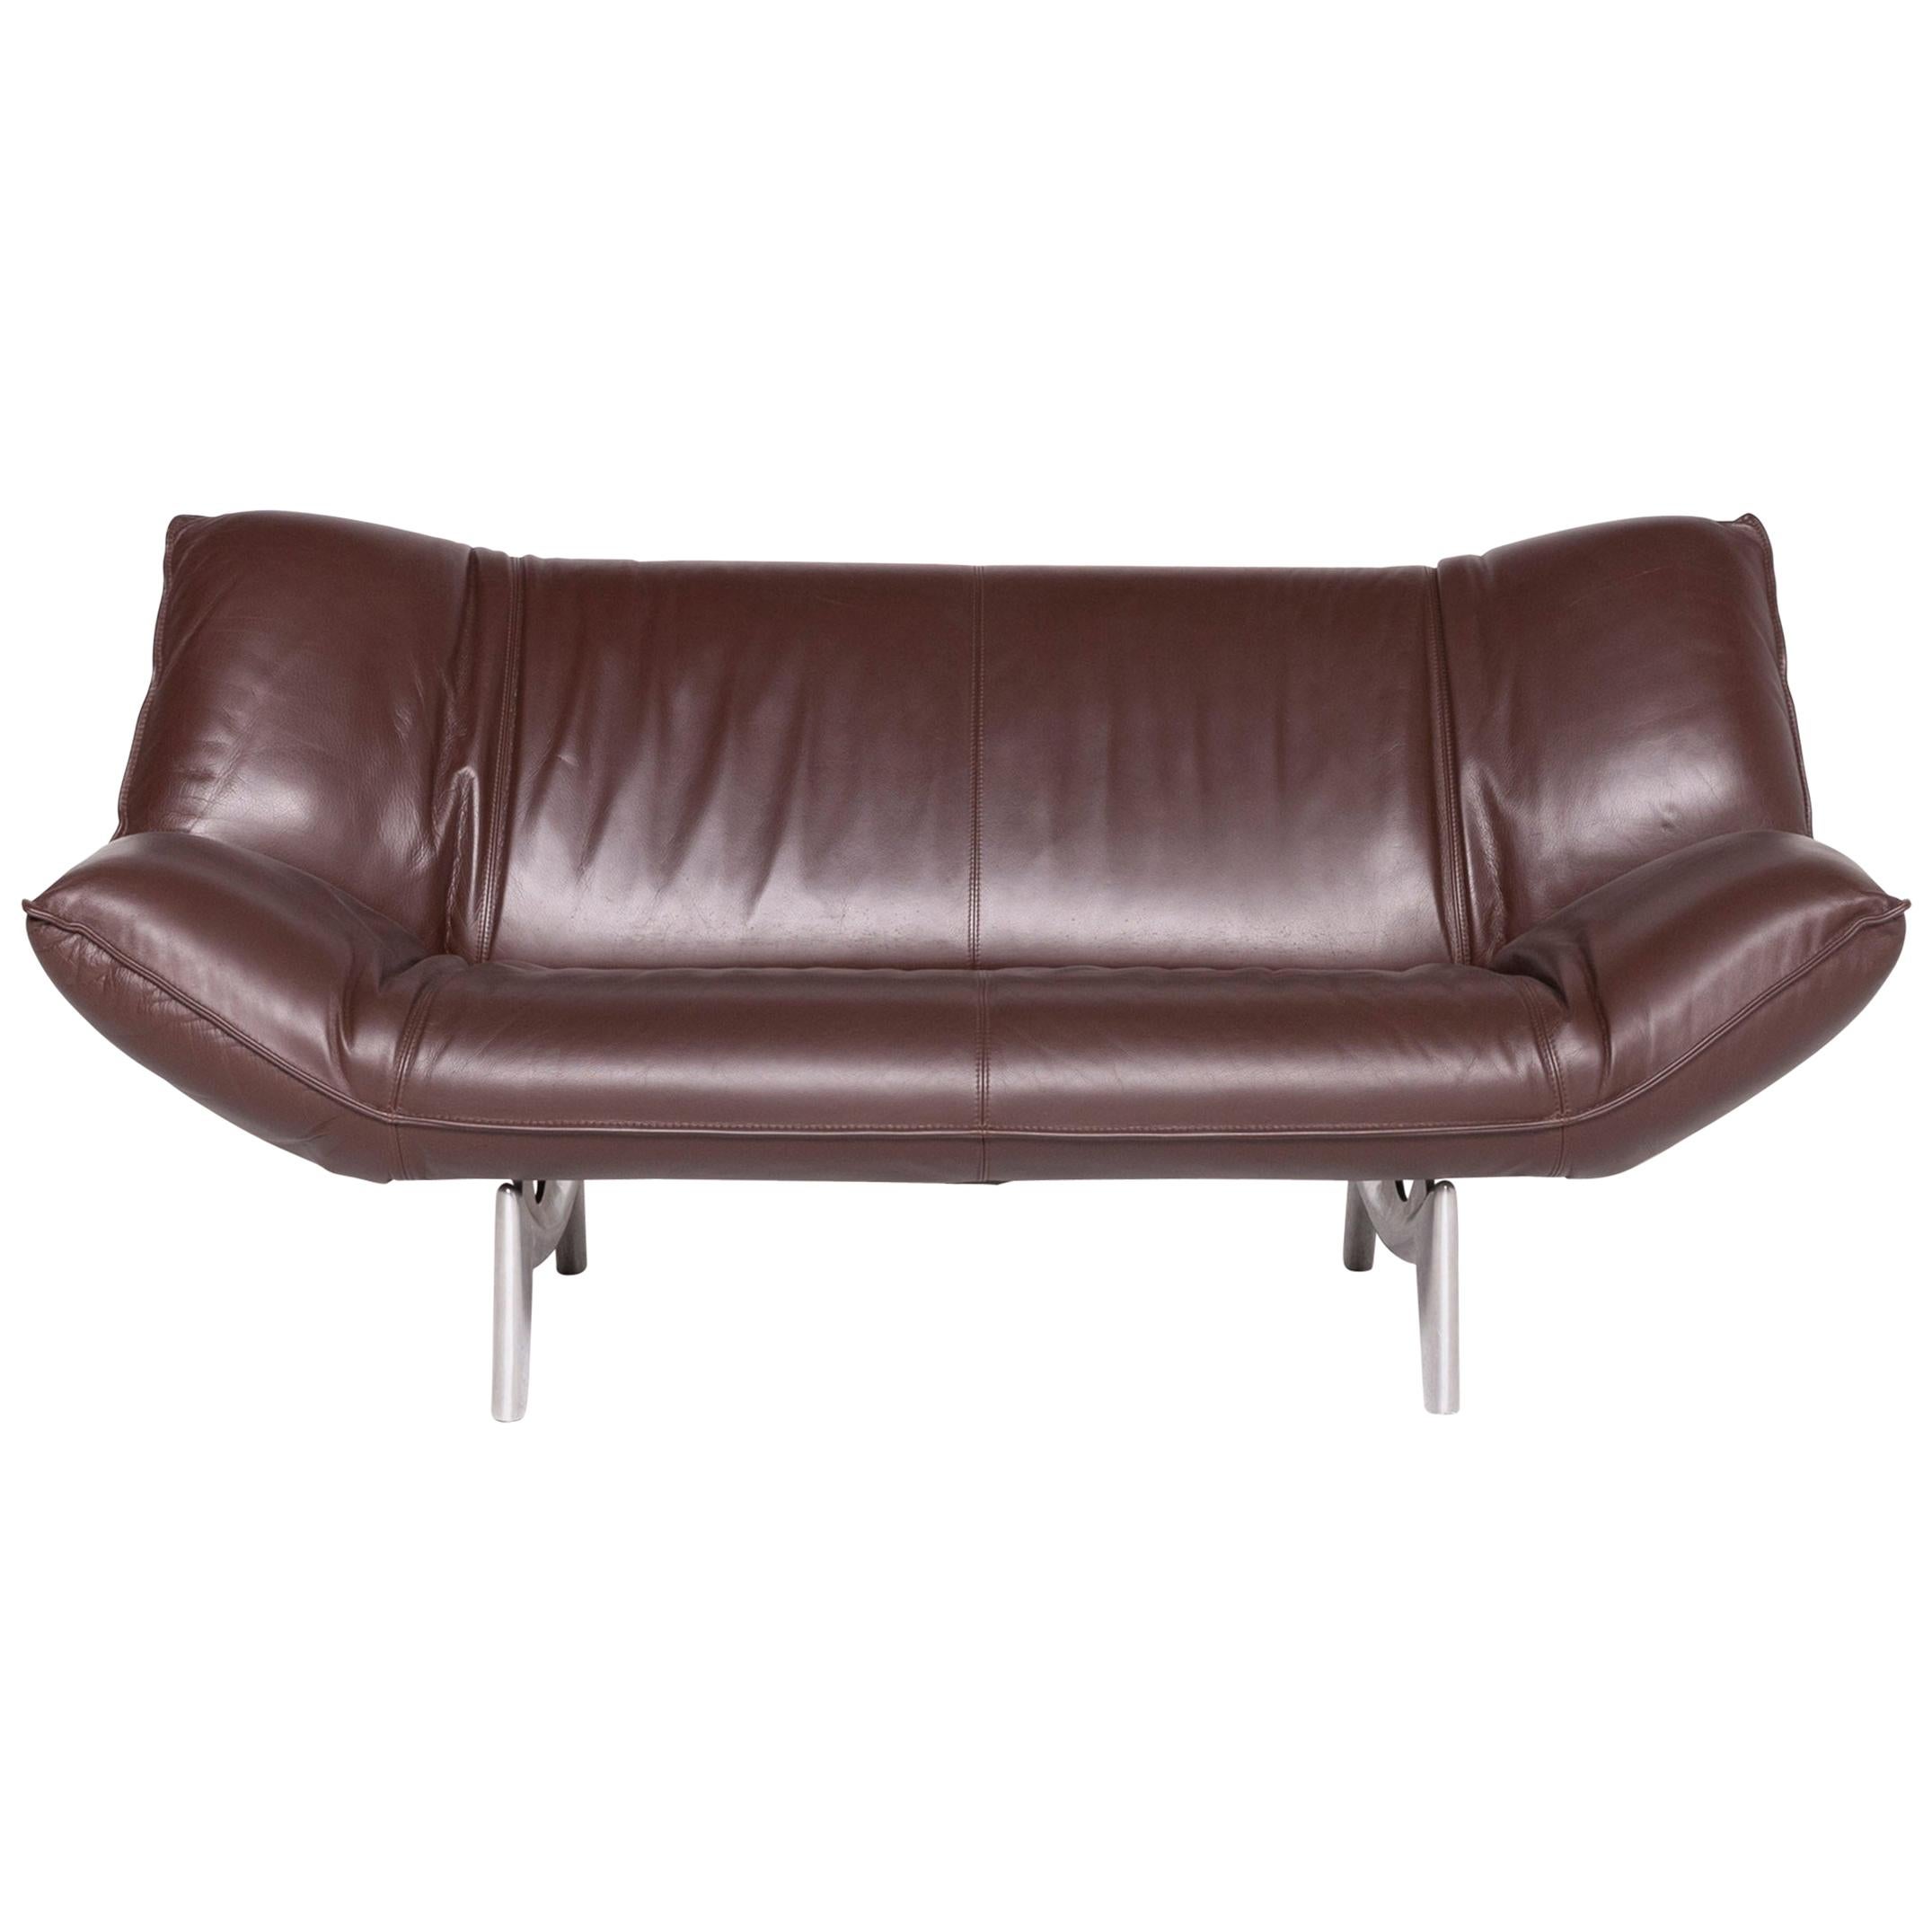 Leolux Tango Designer Leather Sofa Brown Genuine Leather Three-Seat Couch